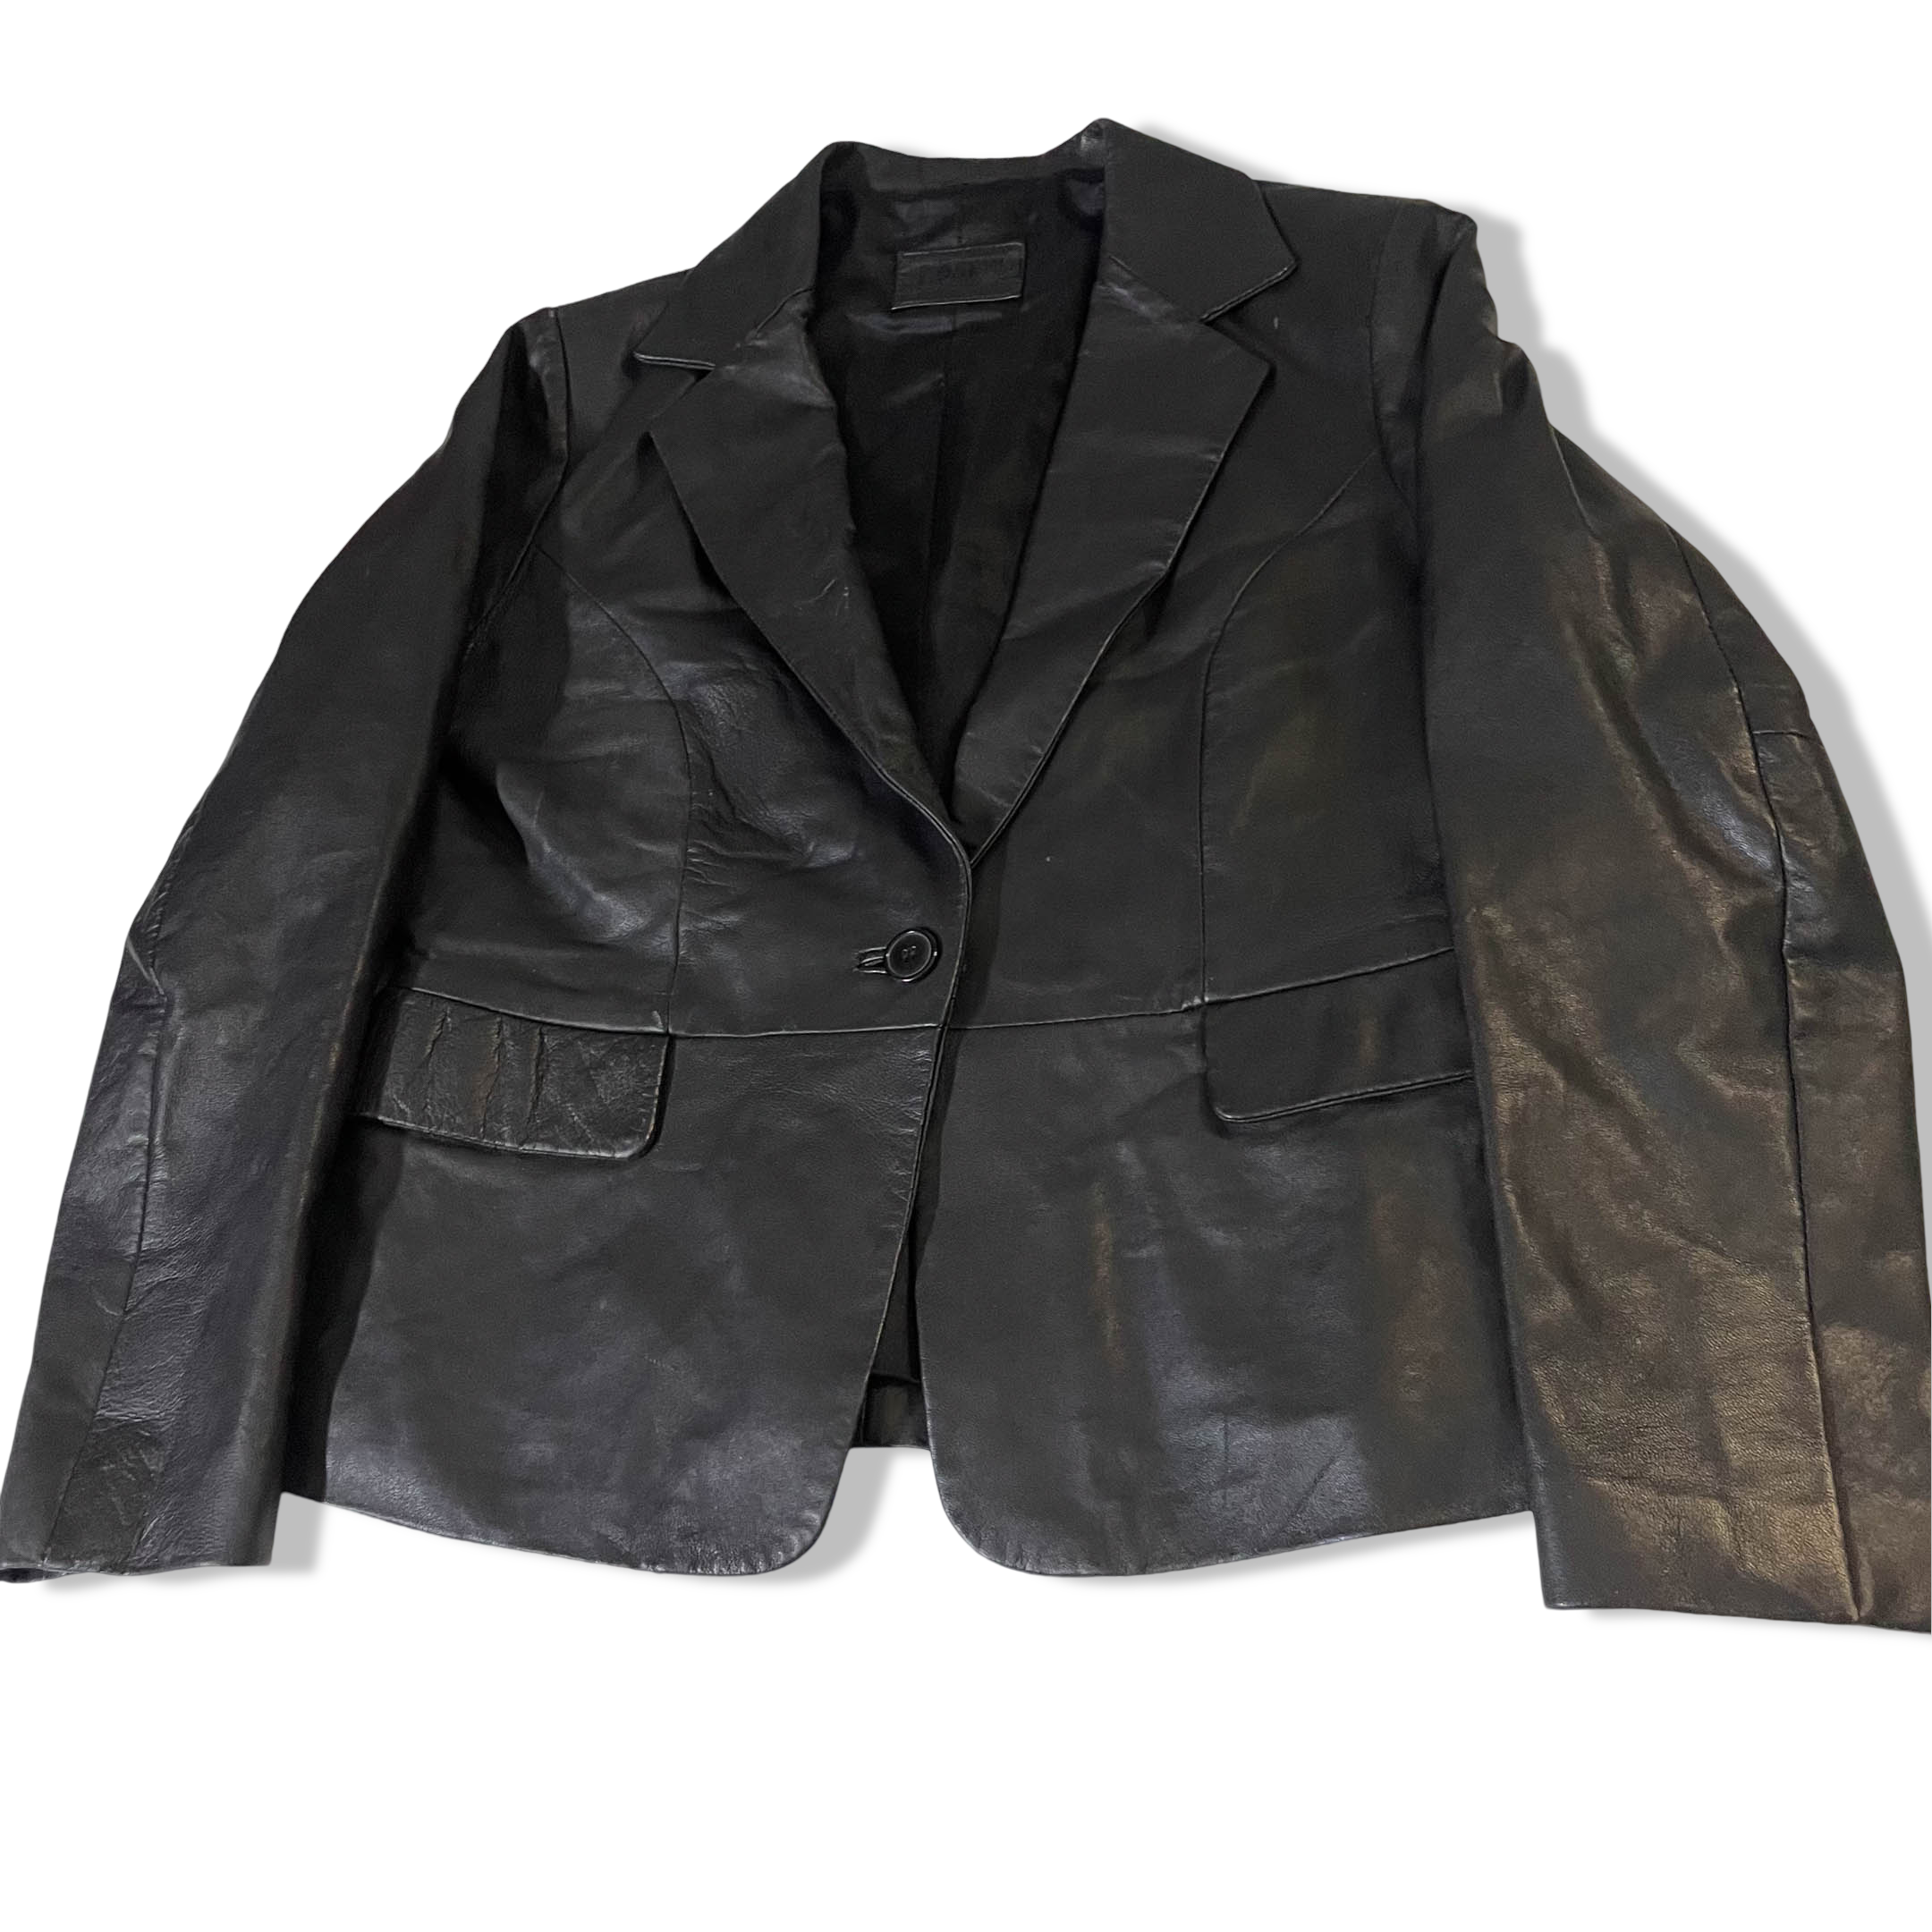 Vintage Women's Stark black leather biker jacket size 14| L27 W 19| SKU 3765